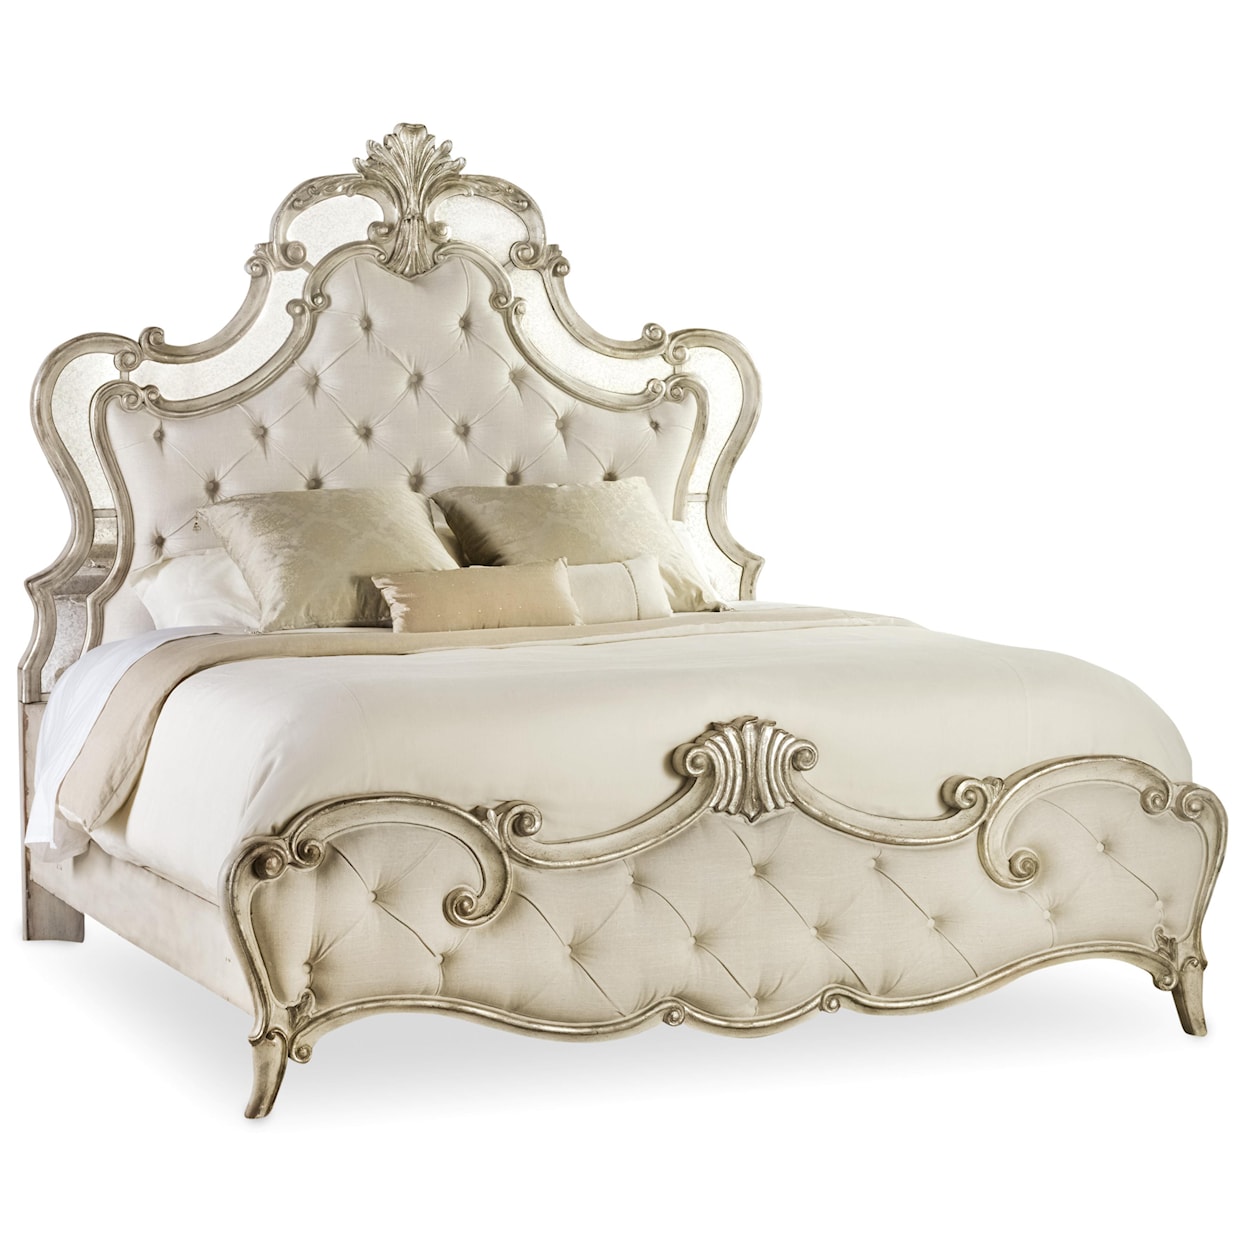 Hooker Furniture Sanctuary California King Upholstered Bed